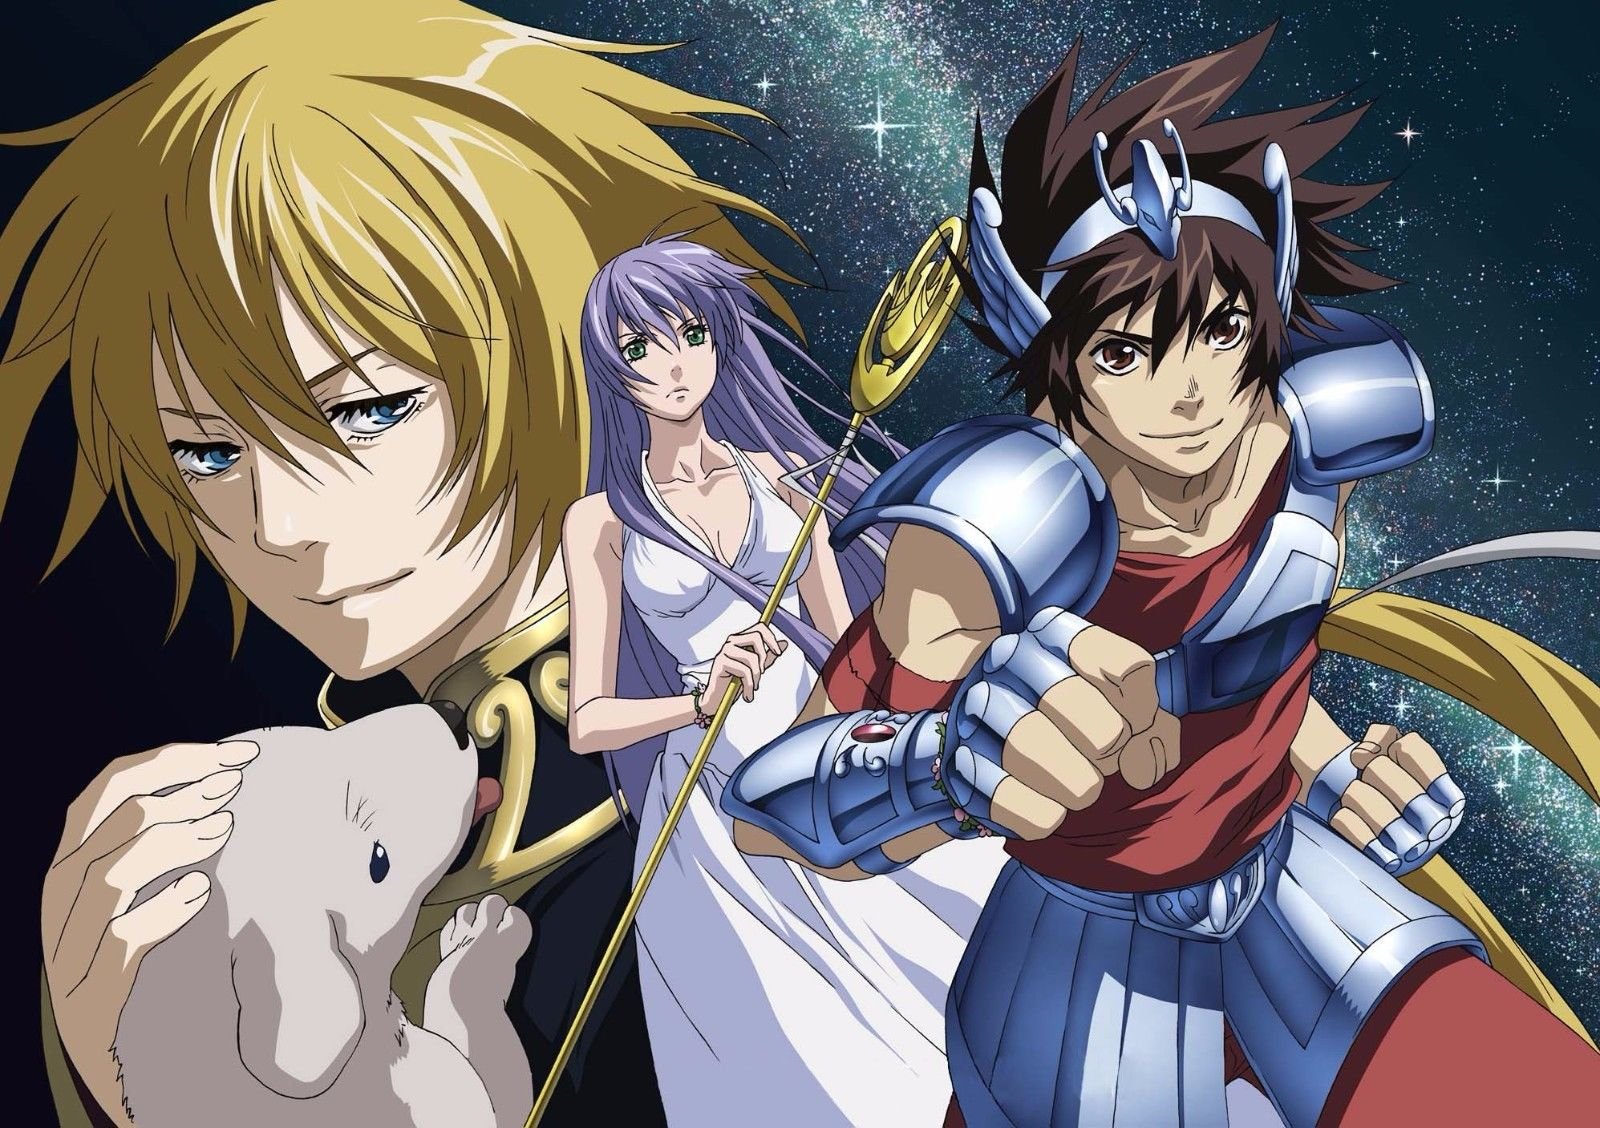 BEDA #19 – O Desafio de Assistir Animes Atualmente – Otaku Pós-Moderno